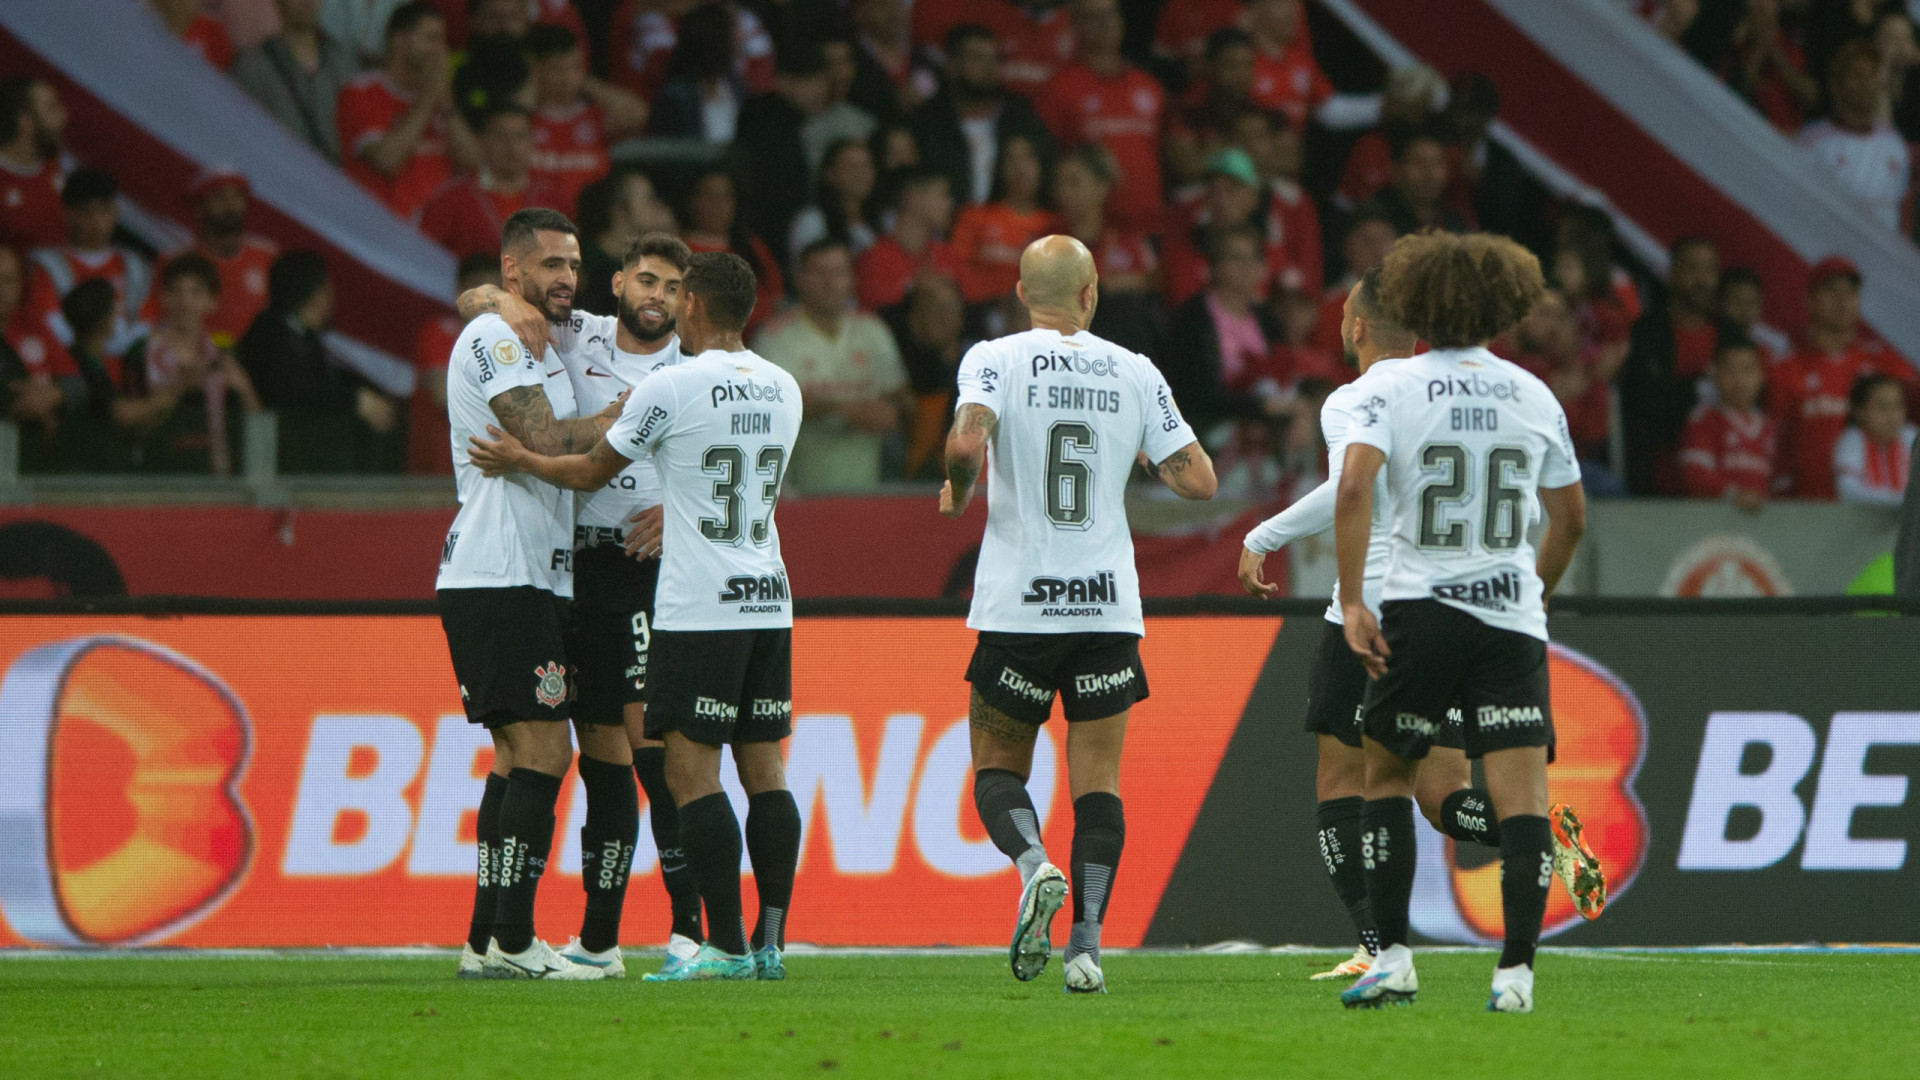 Corinthians visita Newells Old Boys para engatar 10º jogo invicto e avançar na Sul-Americana